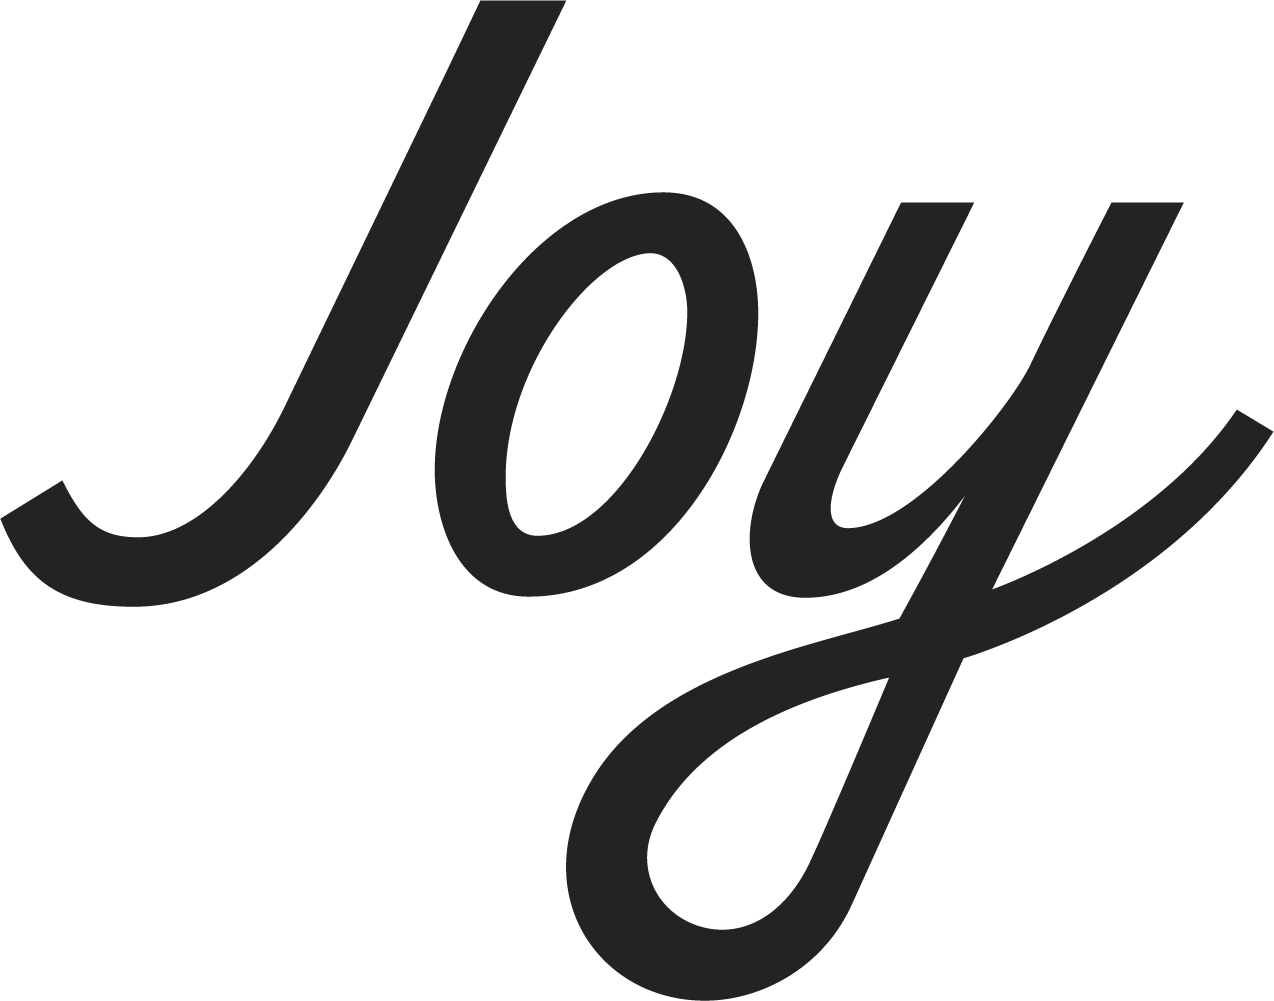 WithJoy-Logo